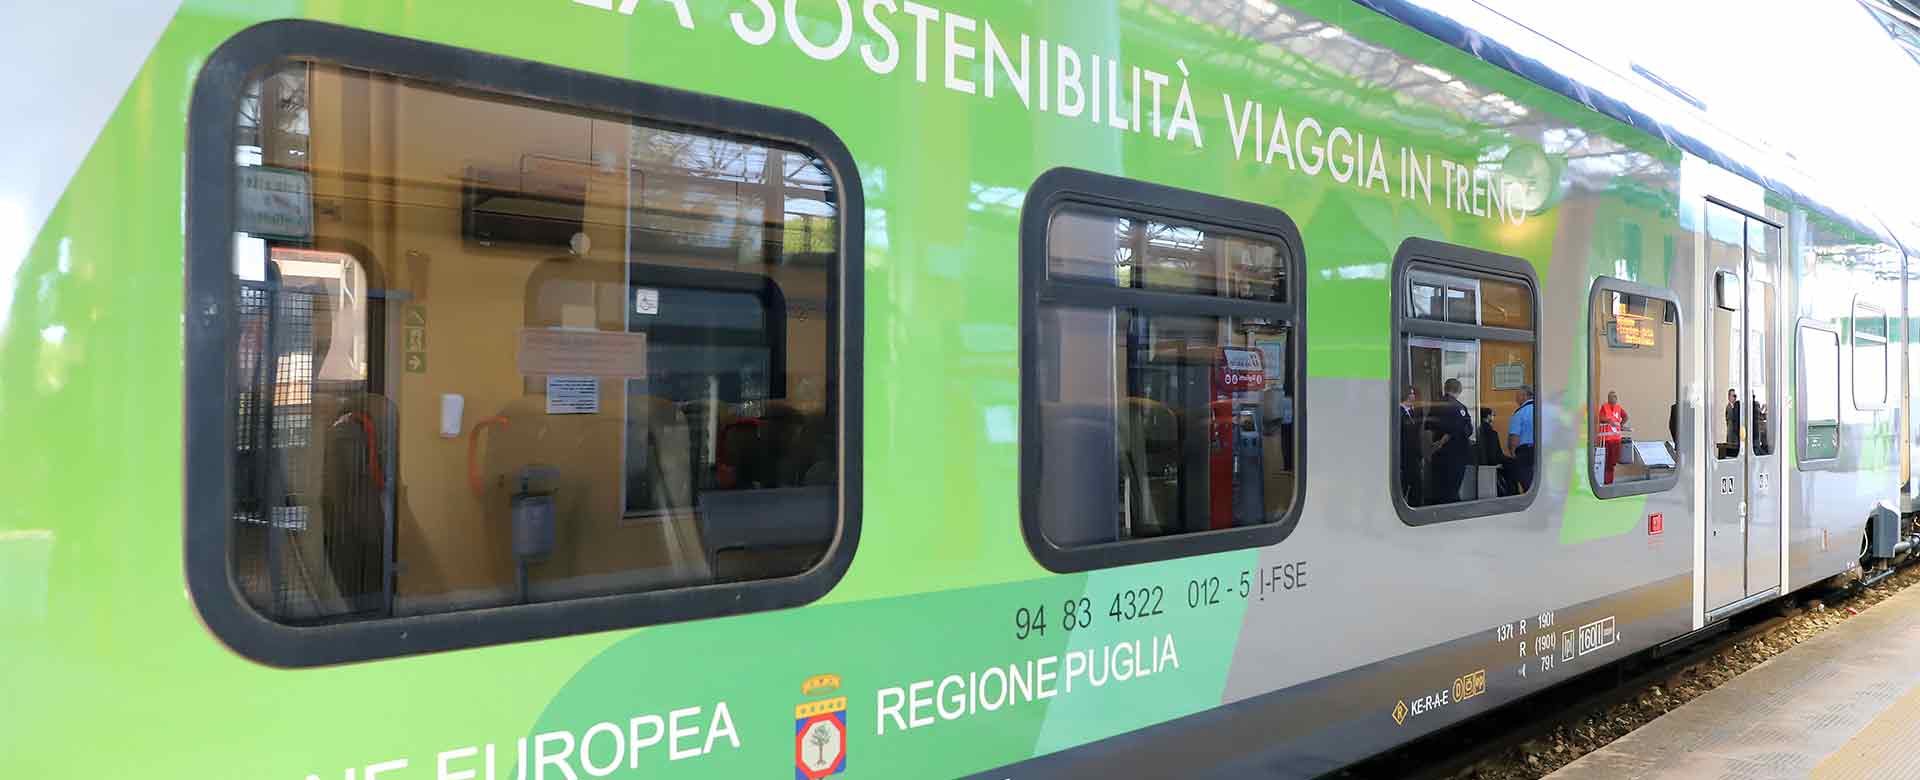 Treno Regionale green